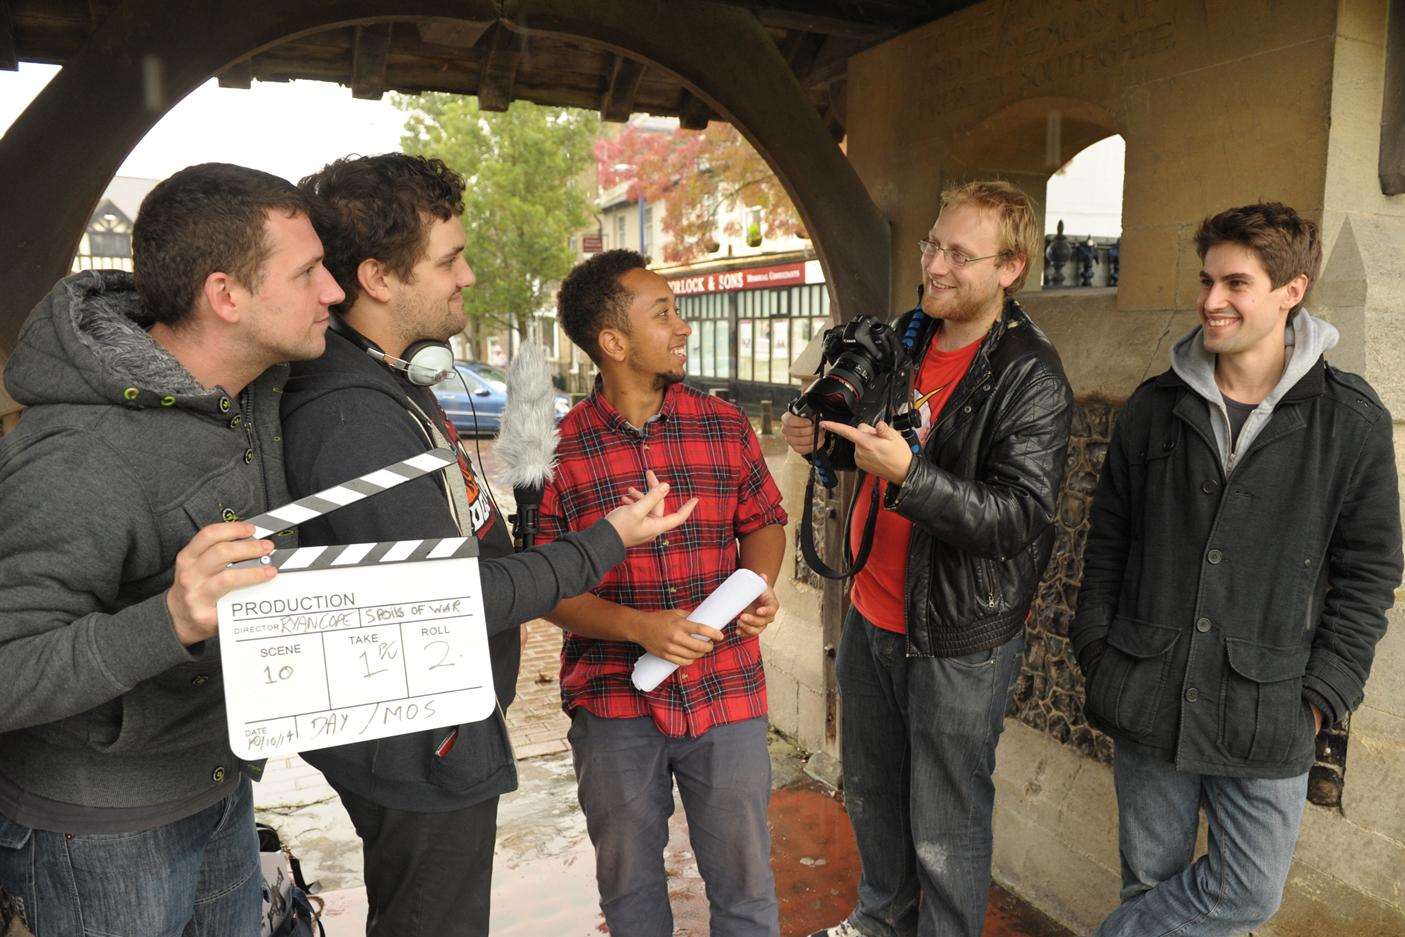 Peter Tyrell (producer), Jonathan Ray (sound), Melvin Appleford (producer), Ryan Cope (director) and David Wayman (actor)